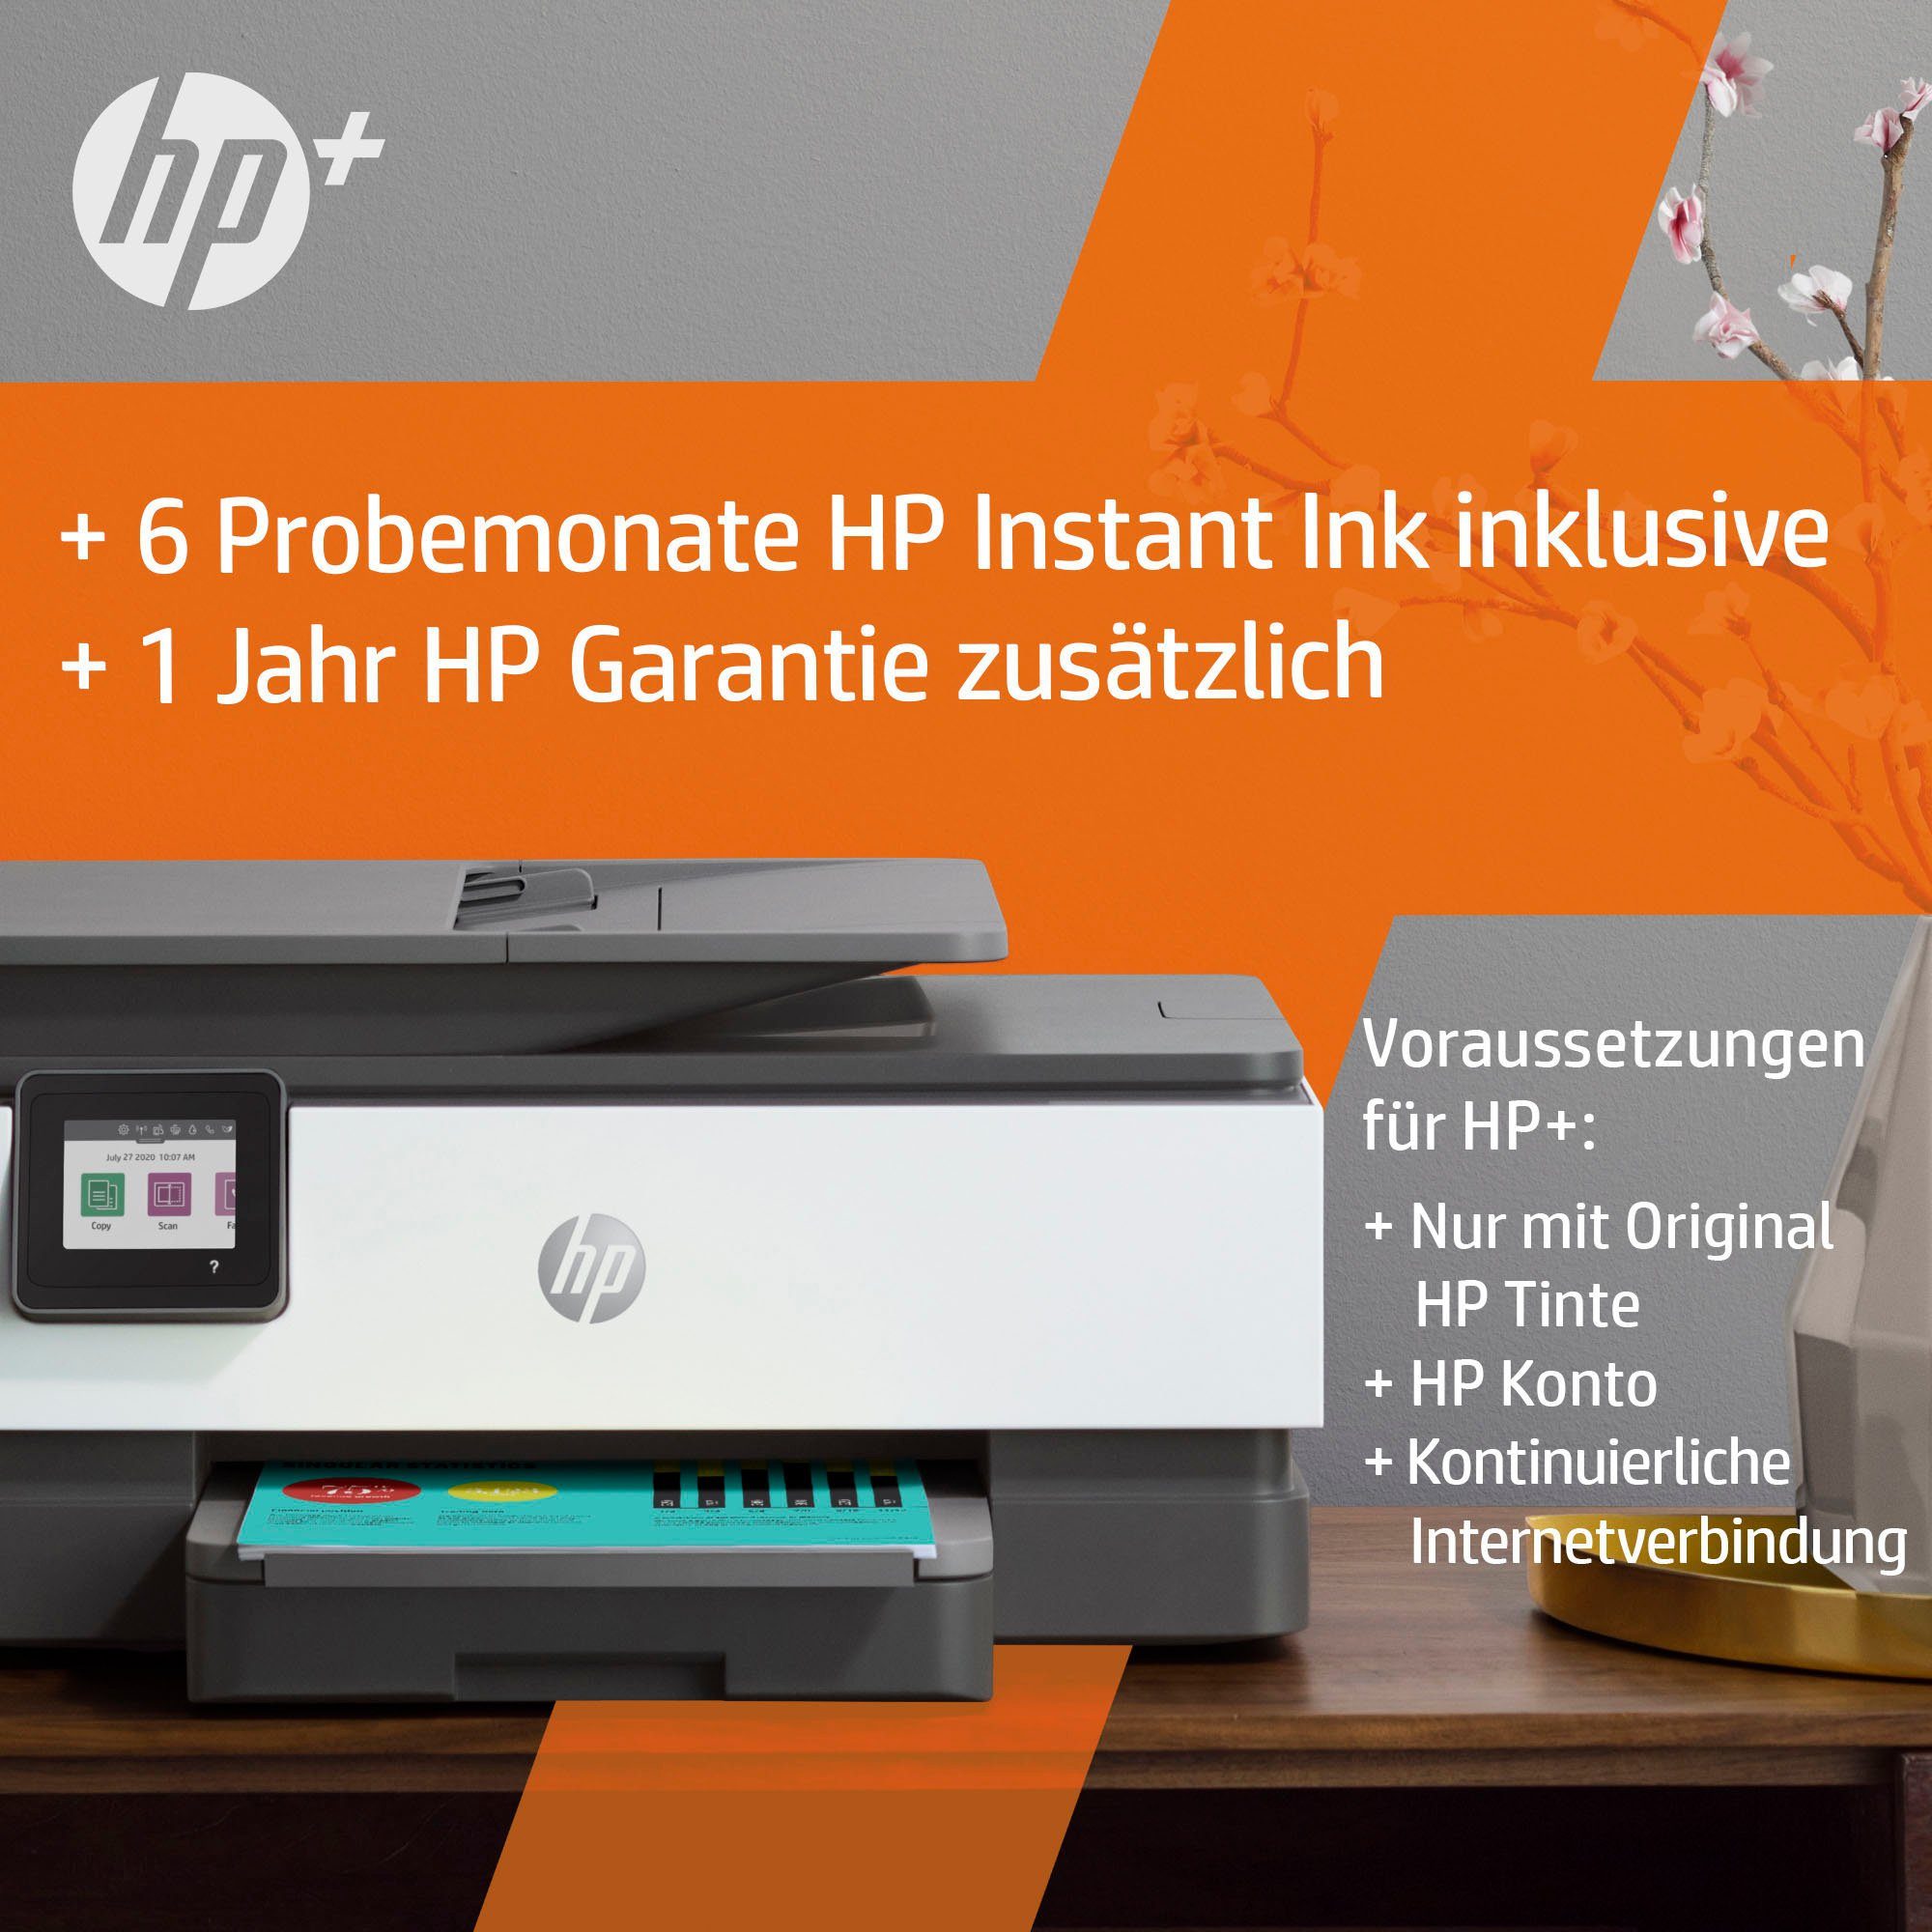 HP+, A4, Drucker, Scanner, Kopierer, Fax, WLAN, LAN, Duplex, HP ePrint, Airprint, mit 6 Probemonaten HP Instant Ink Inklusive HP OfficeJet Pro 8022e Multifunktionsdrucker Basalt 